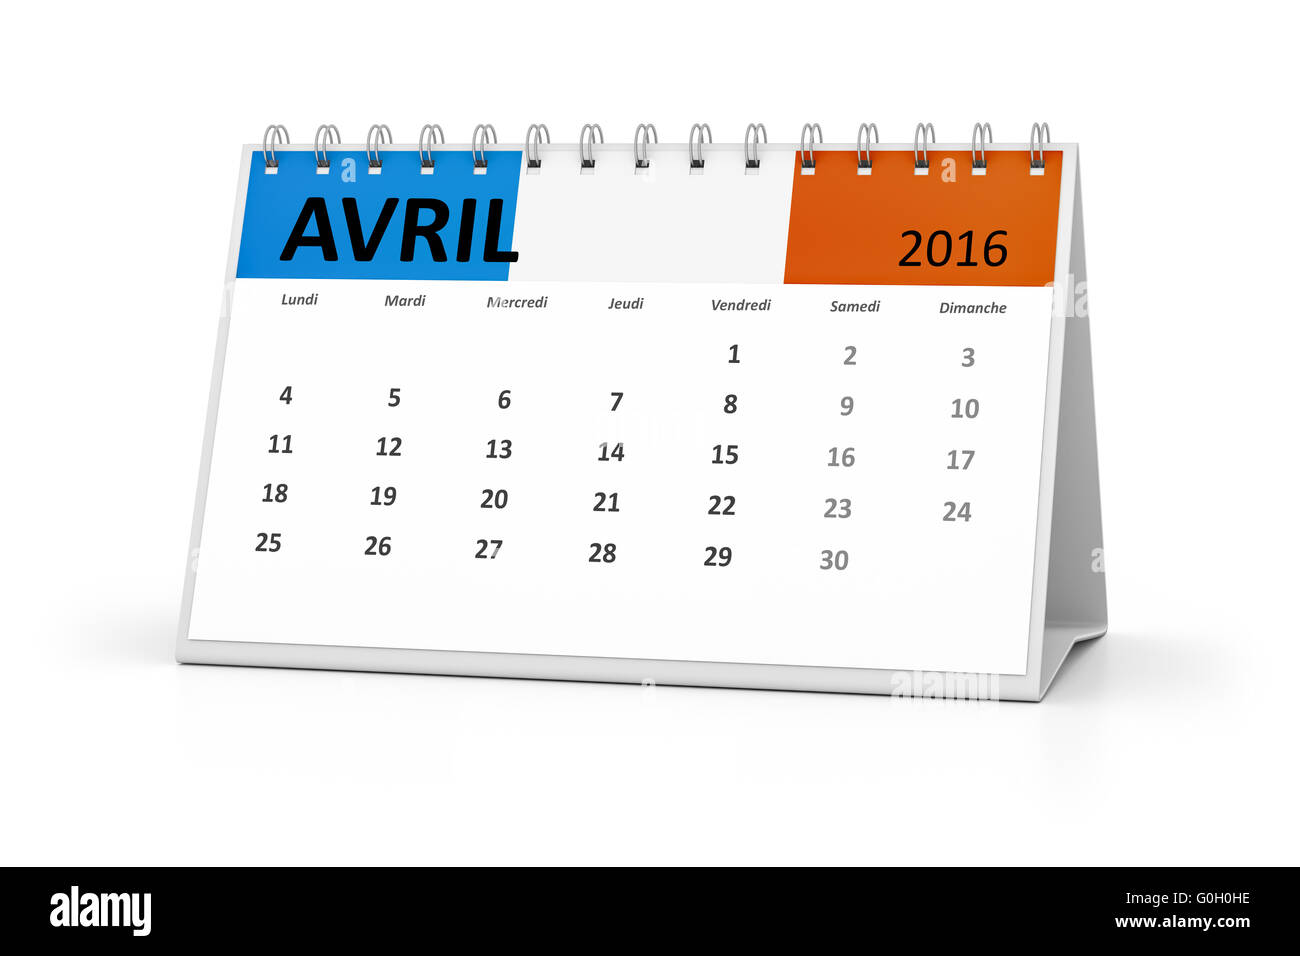 french language table calendar 2016 april Stock Photo